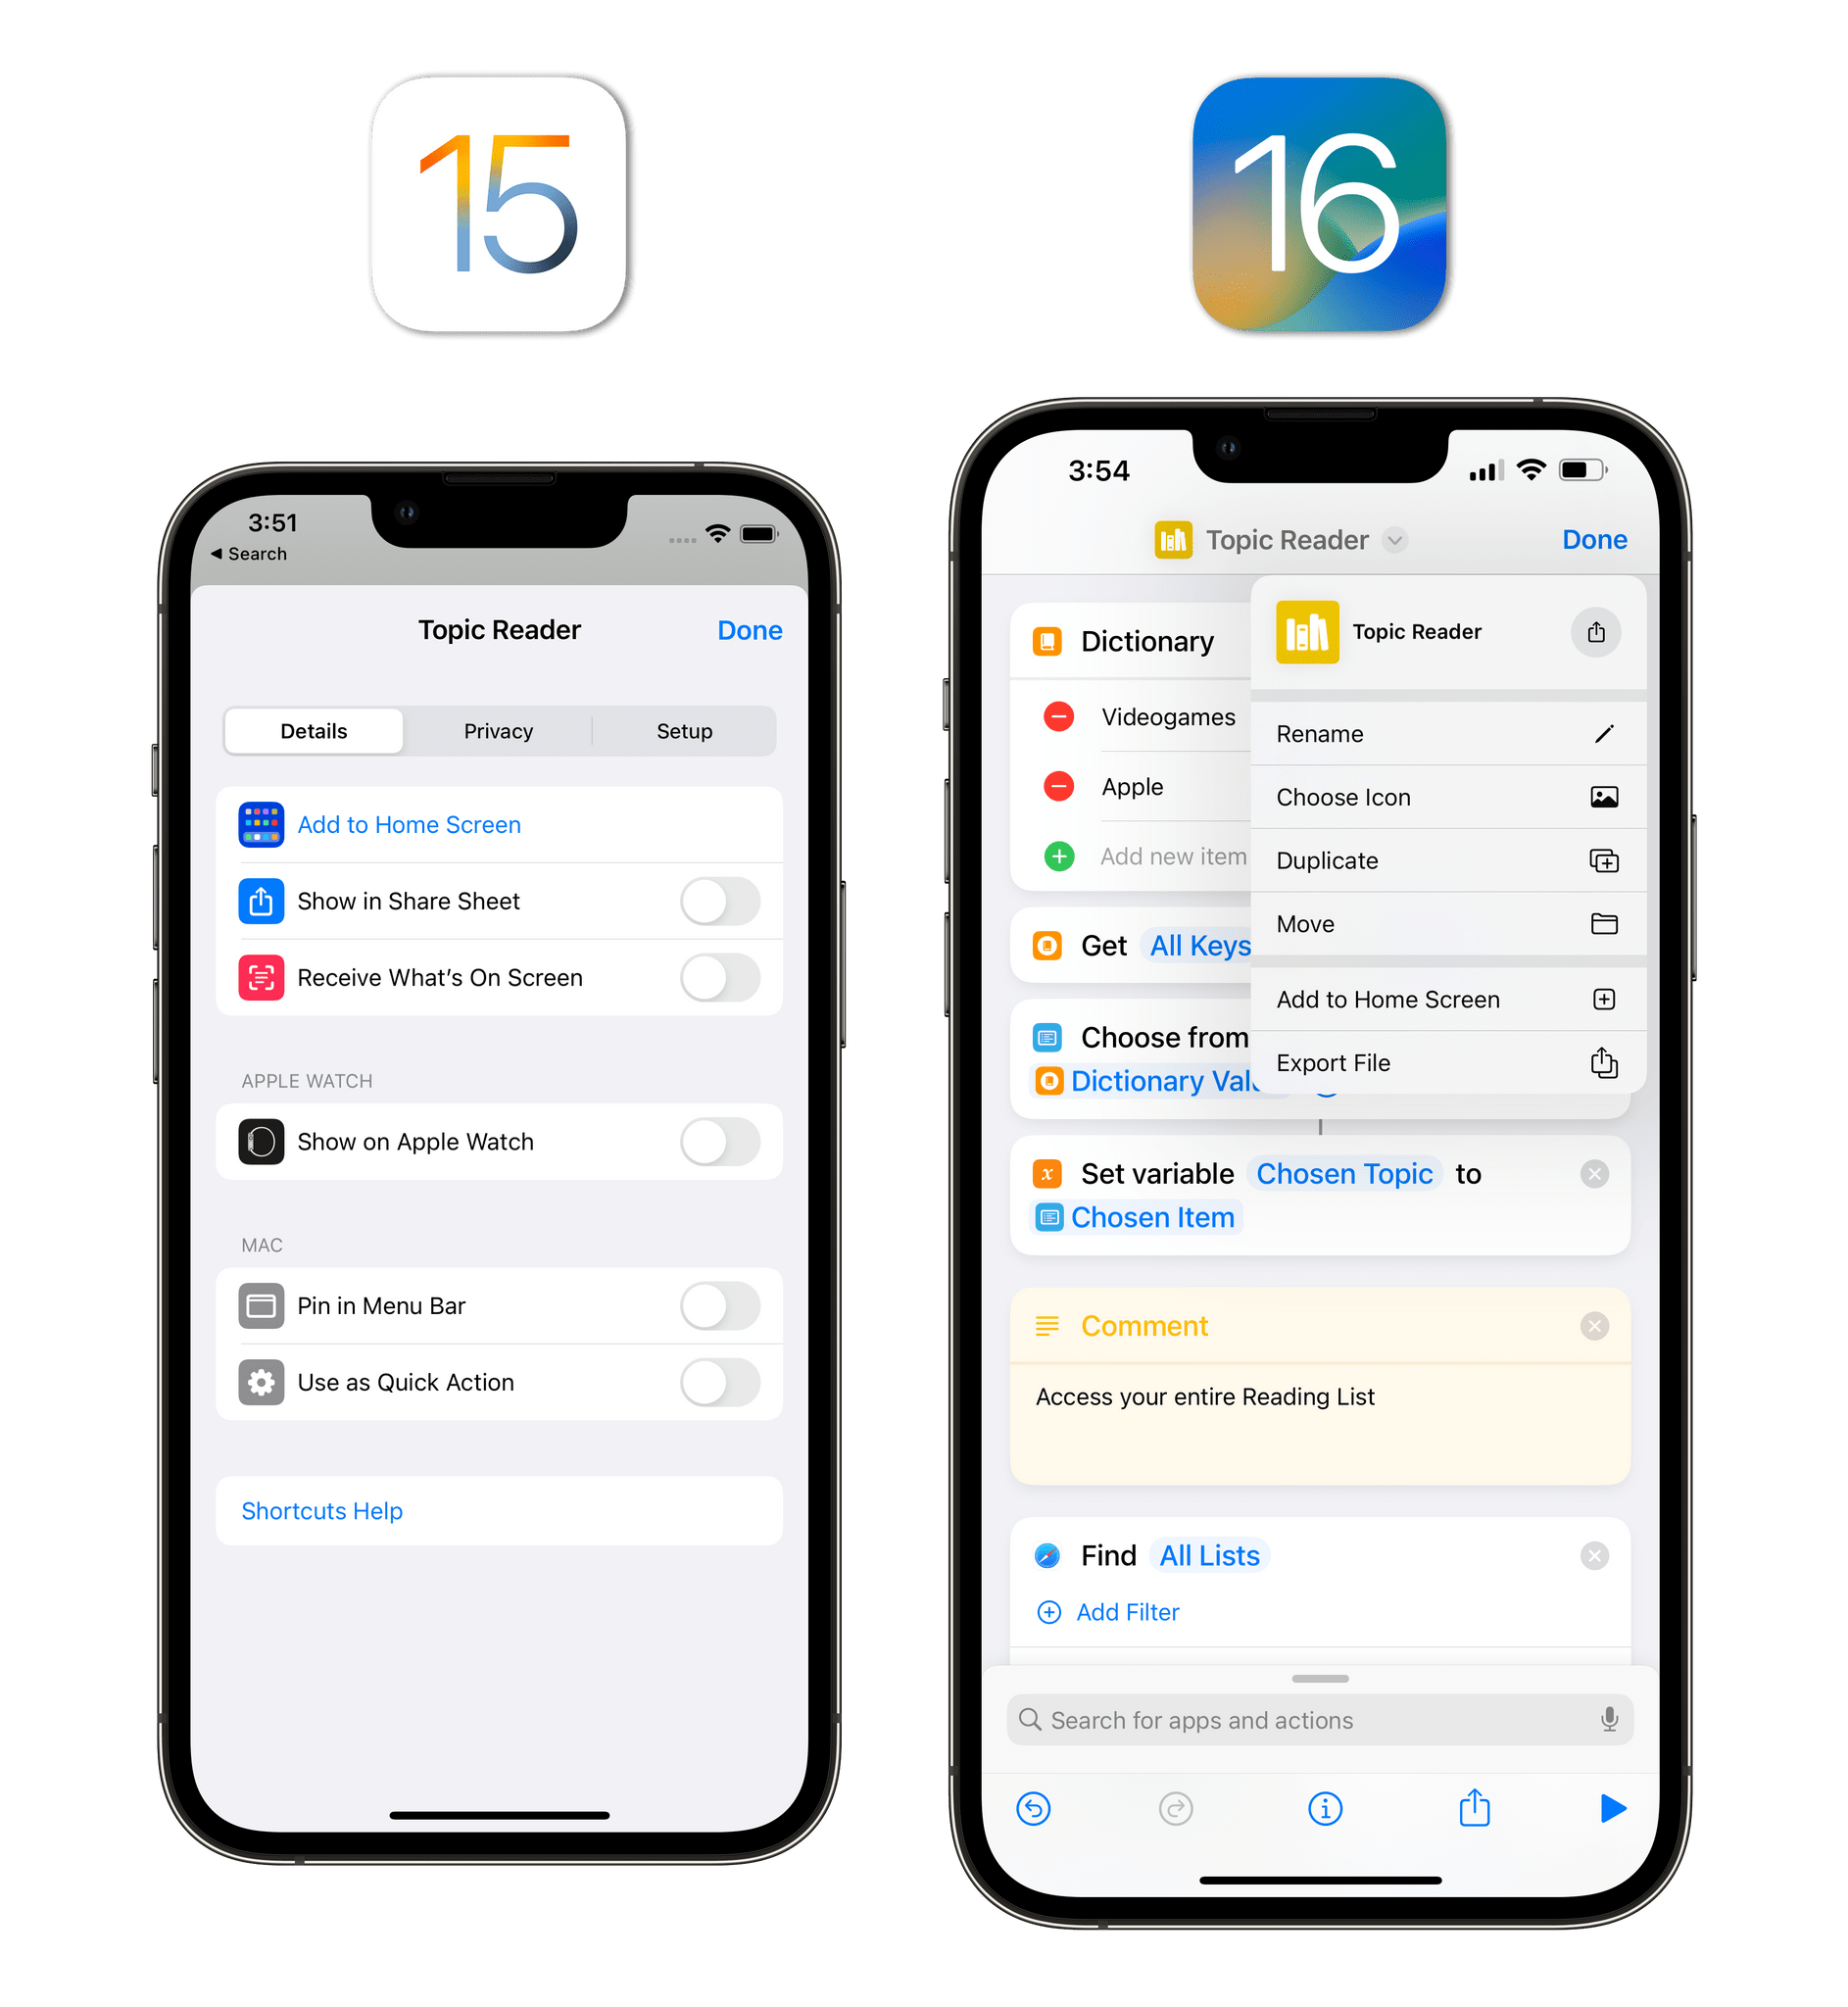 The new shortcut menu in iOS 16.